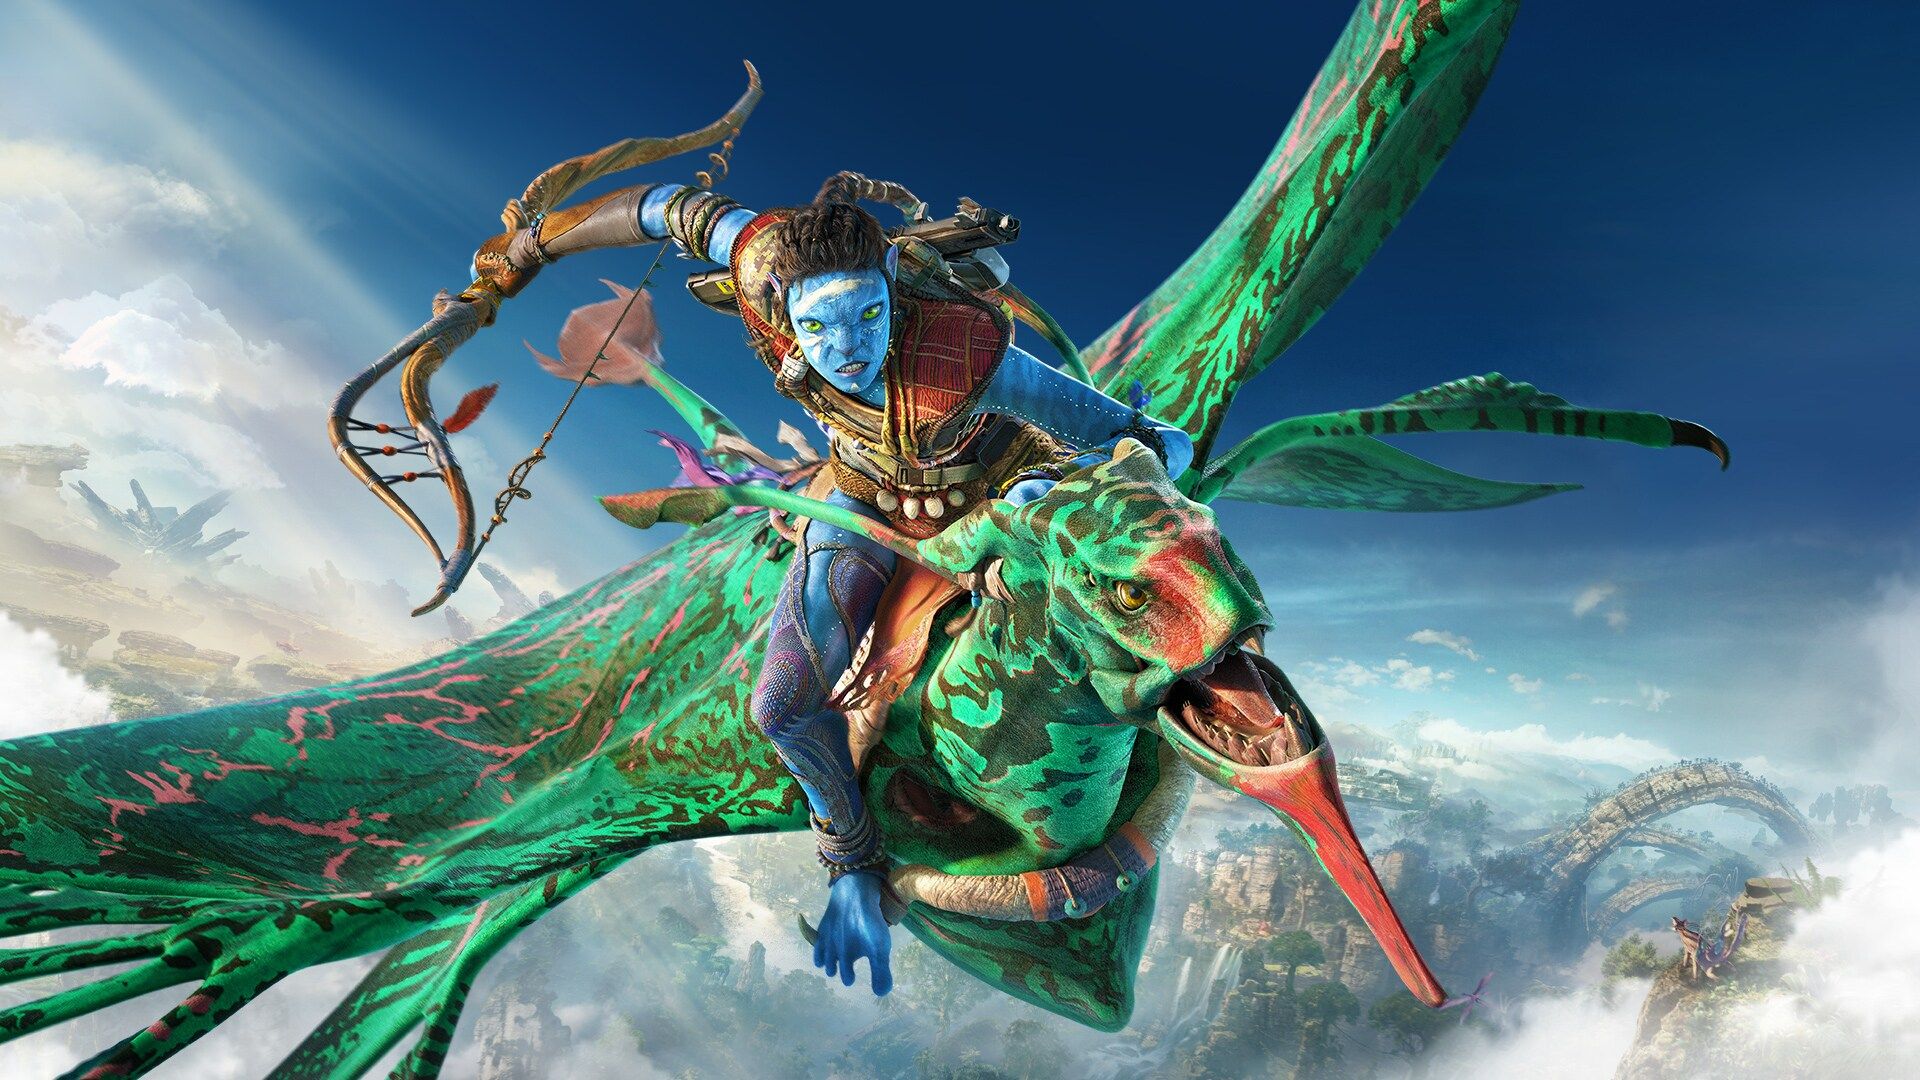 Avatar: Frontiers of Pandora ушла «на золото» — релиз ожидается 7 декабря